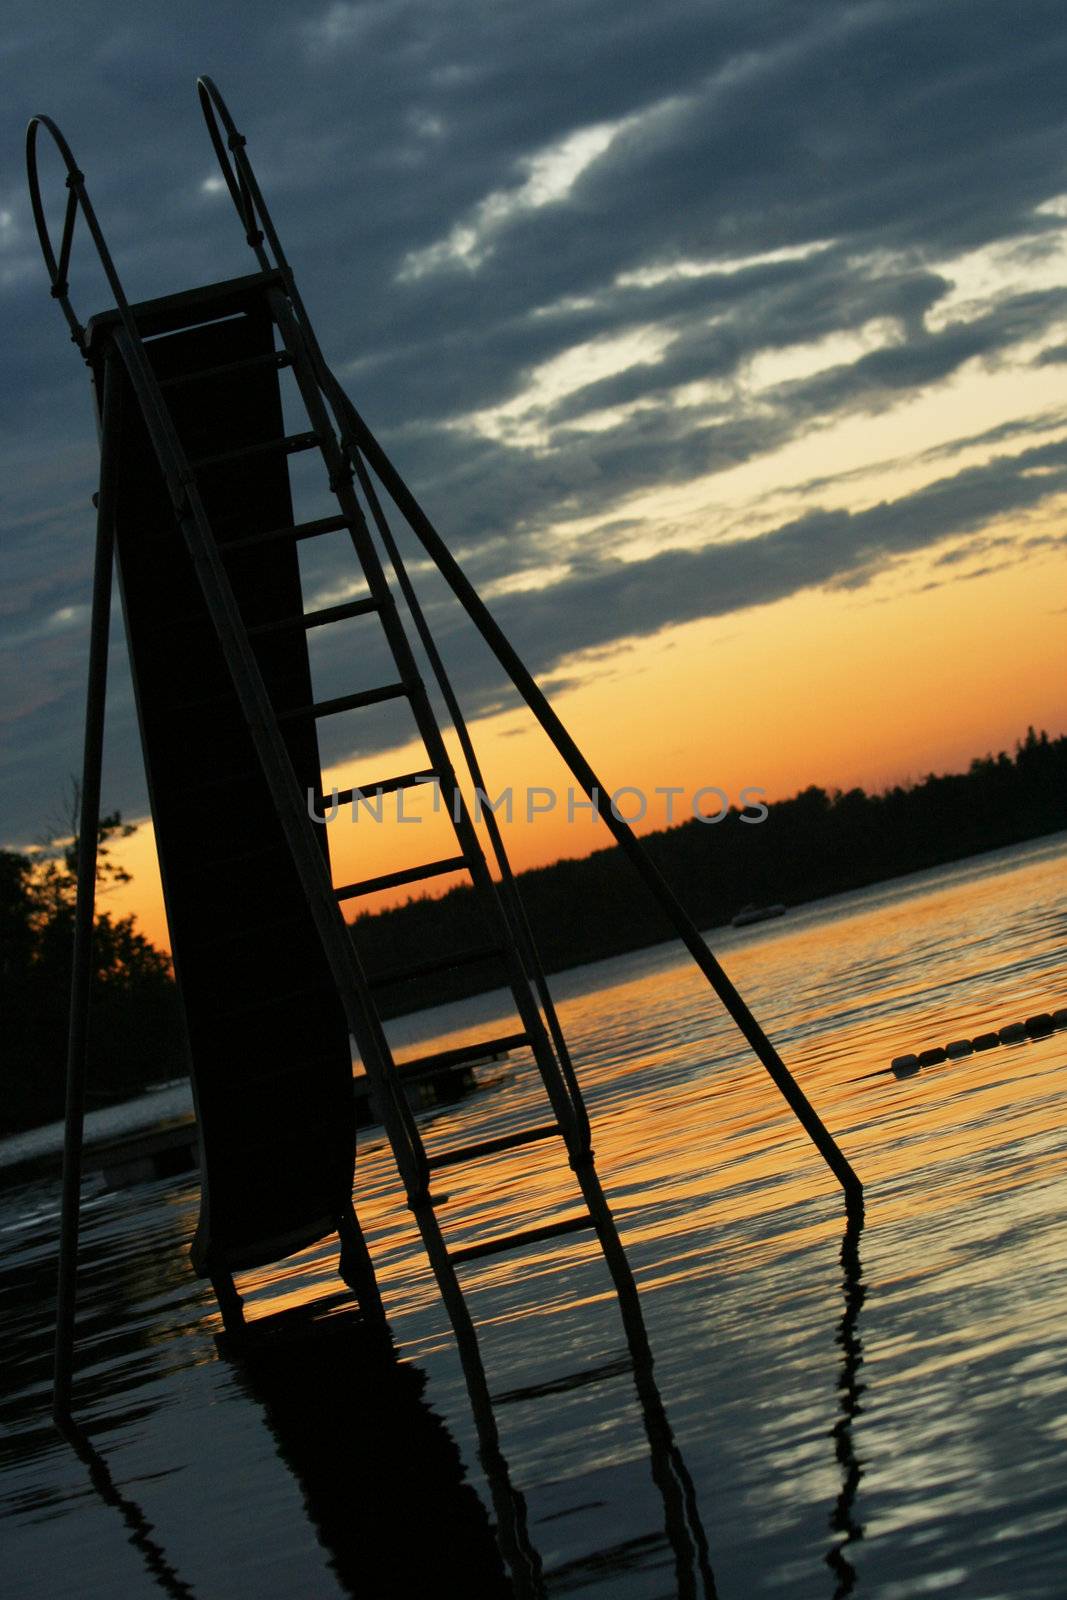 Slide set into lake at sunset